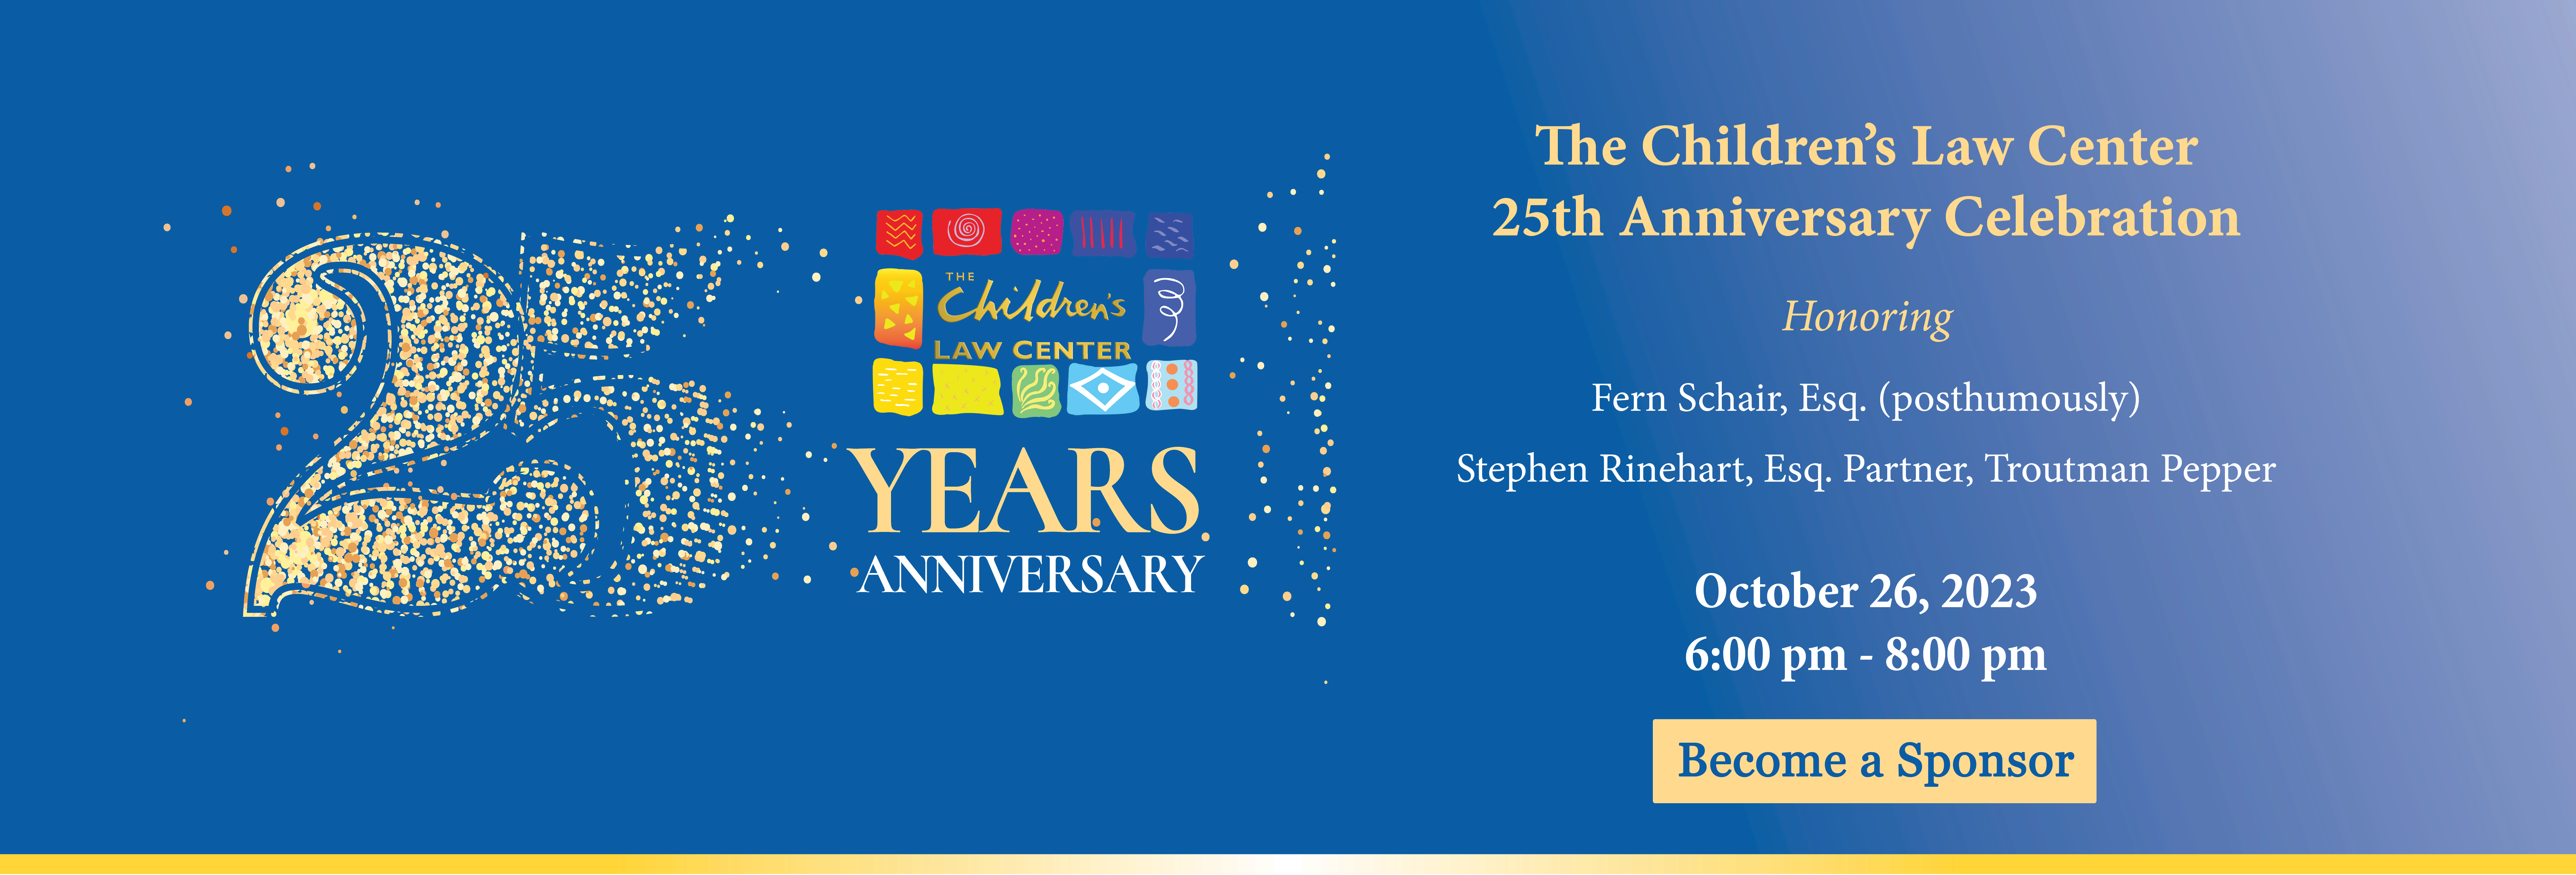 CLC 25th Anniversary Promotion